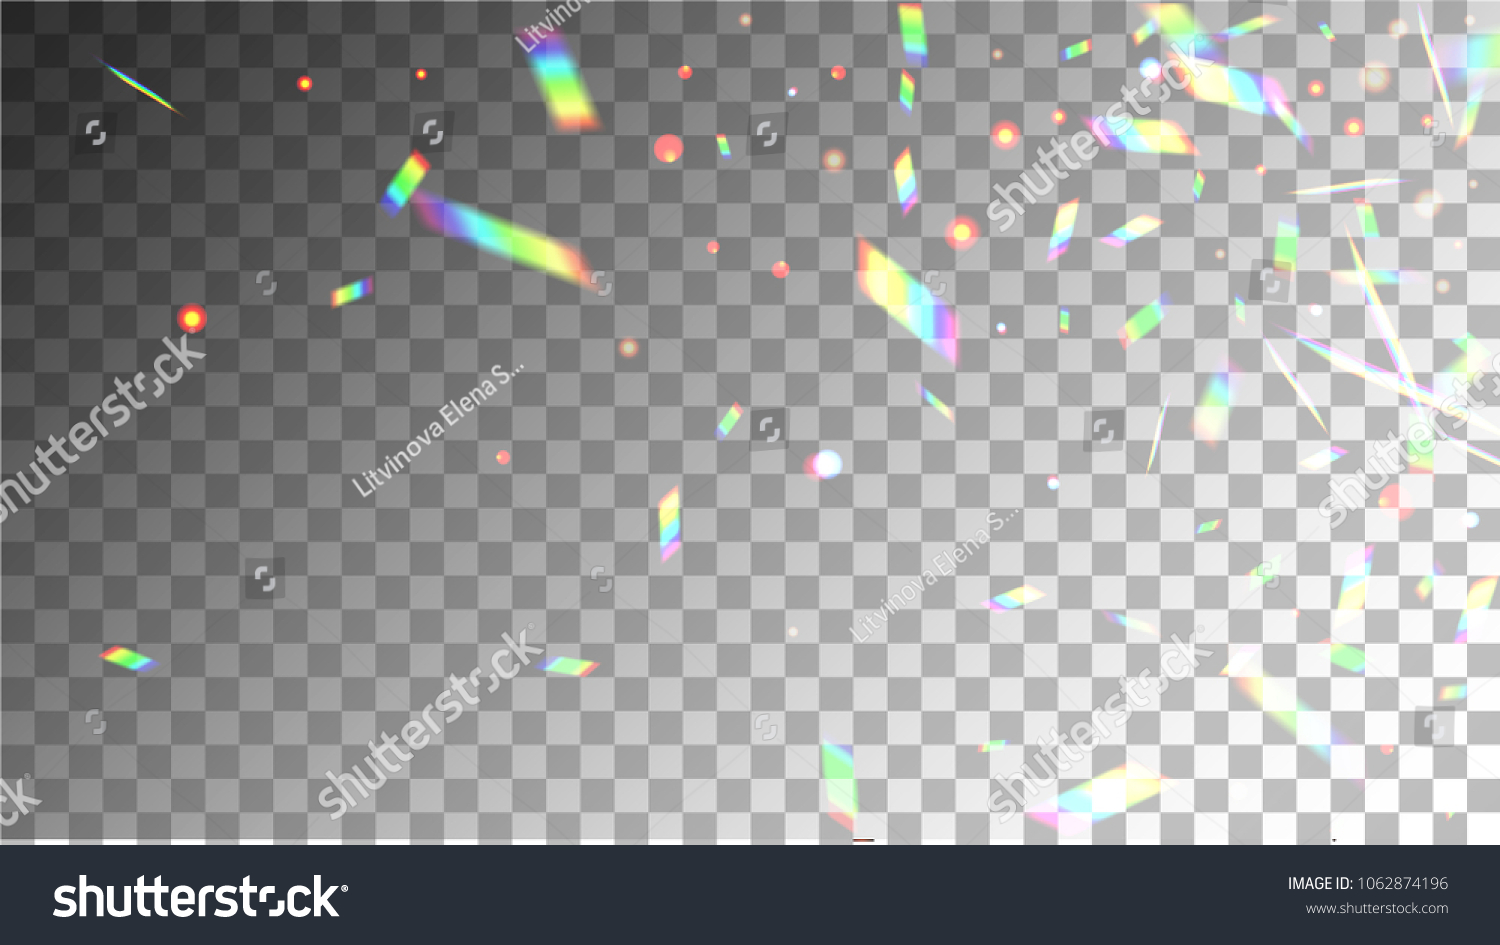 rainbow glitch overlay